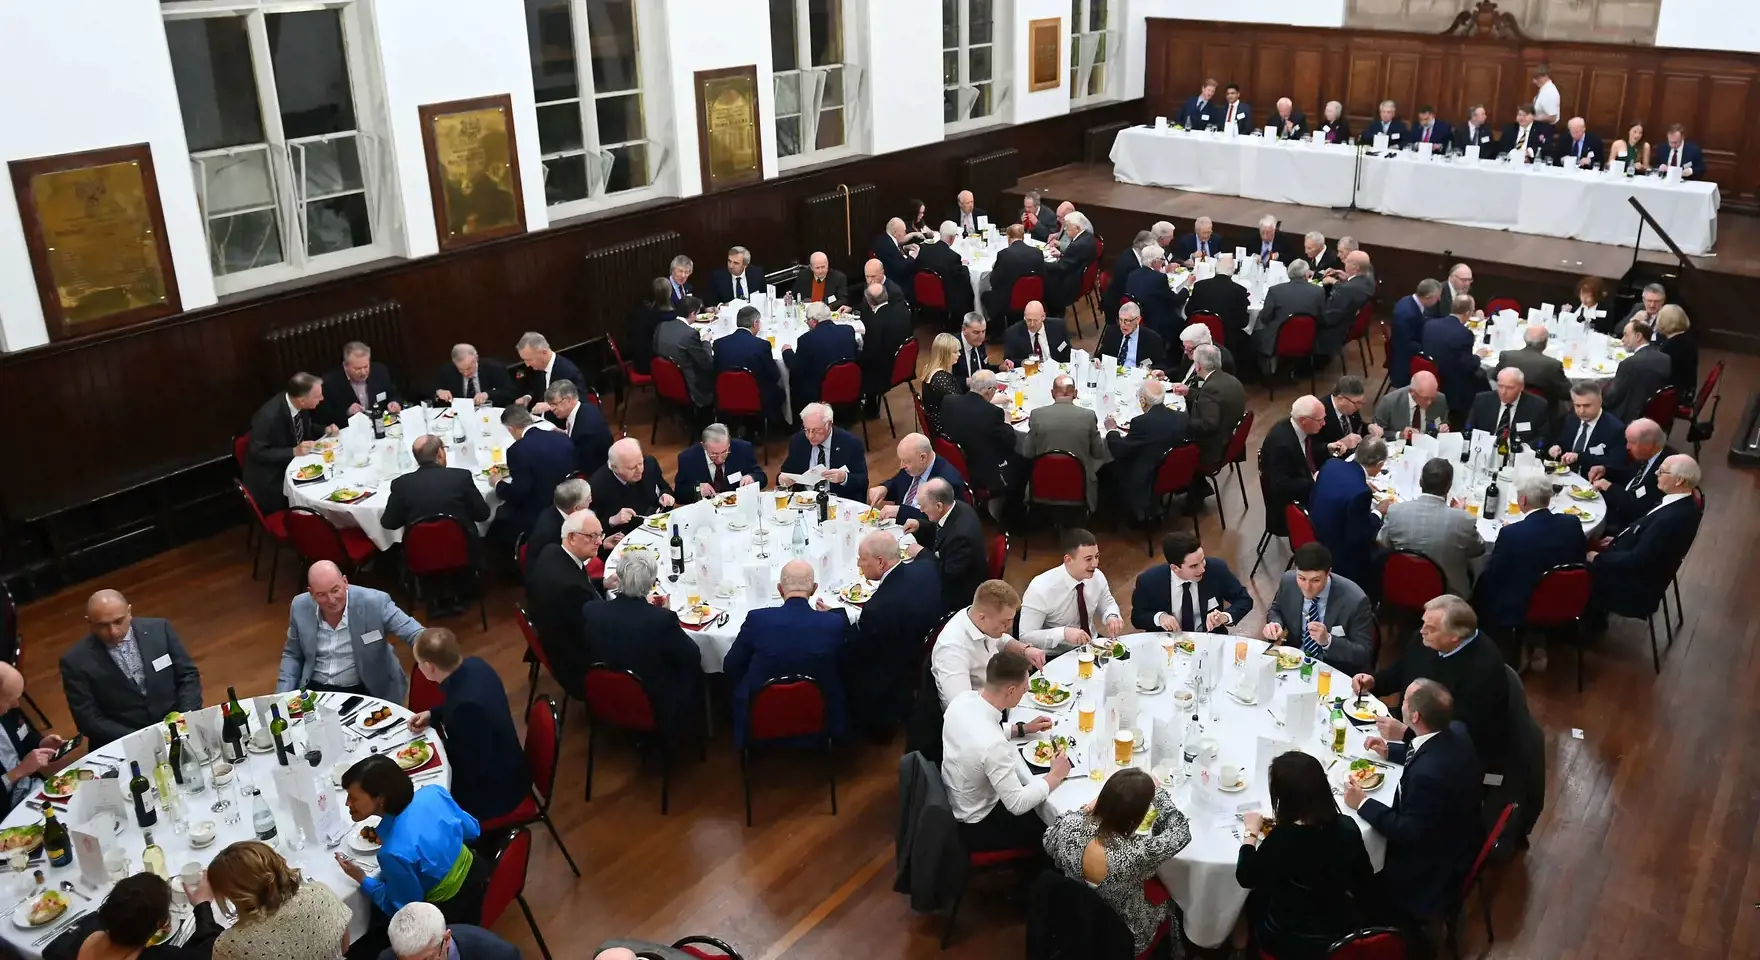 Alumni dinner at Wolverhampton Grammar School